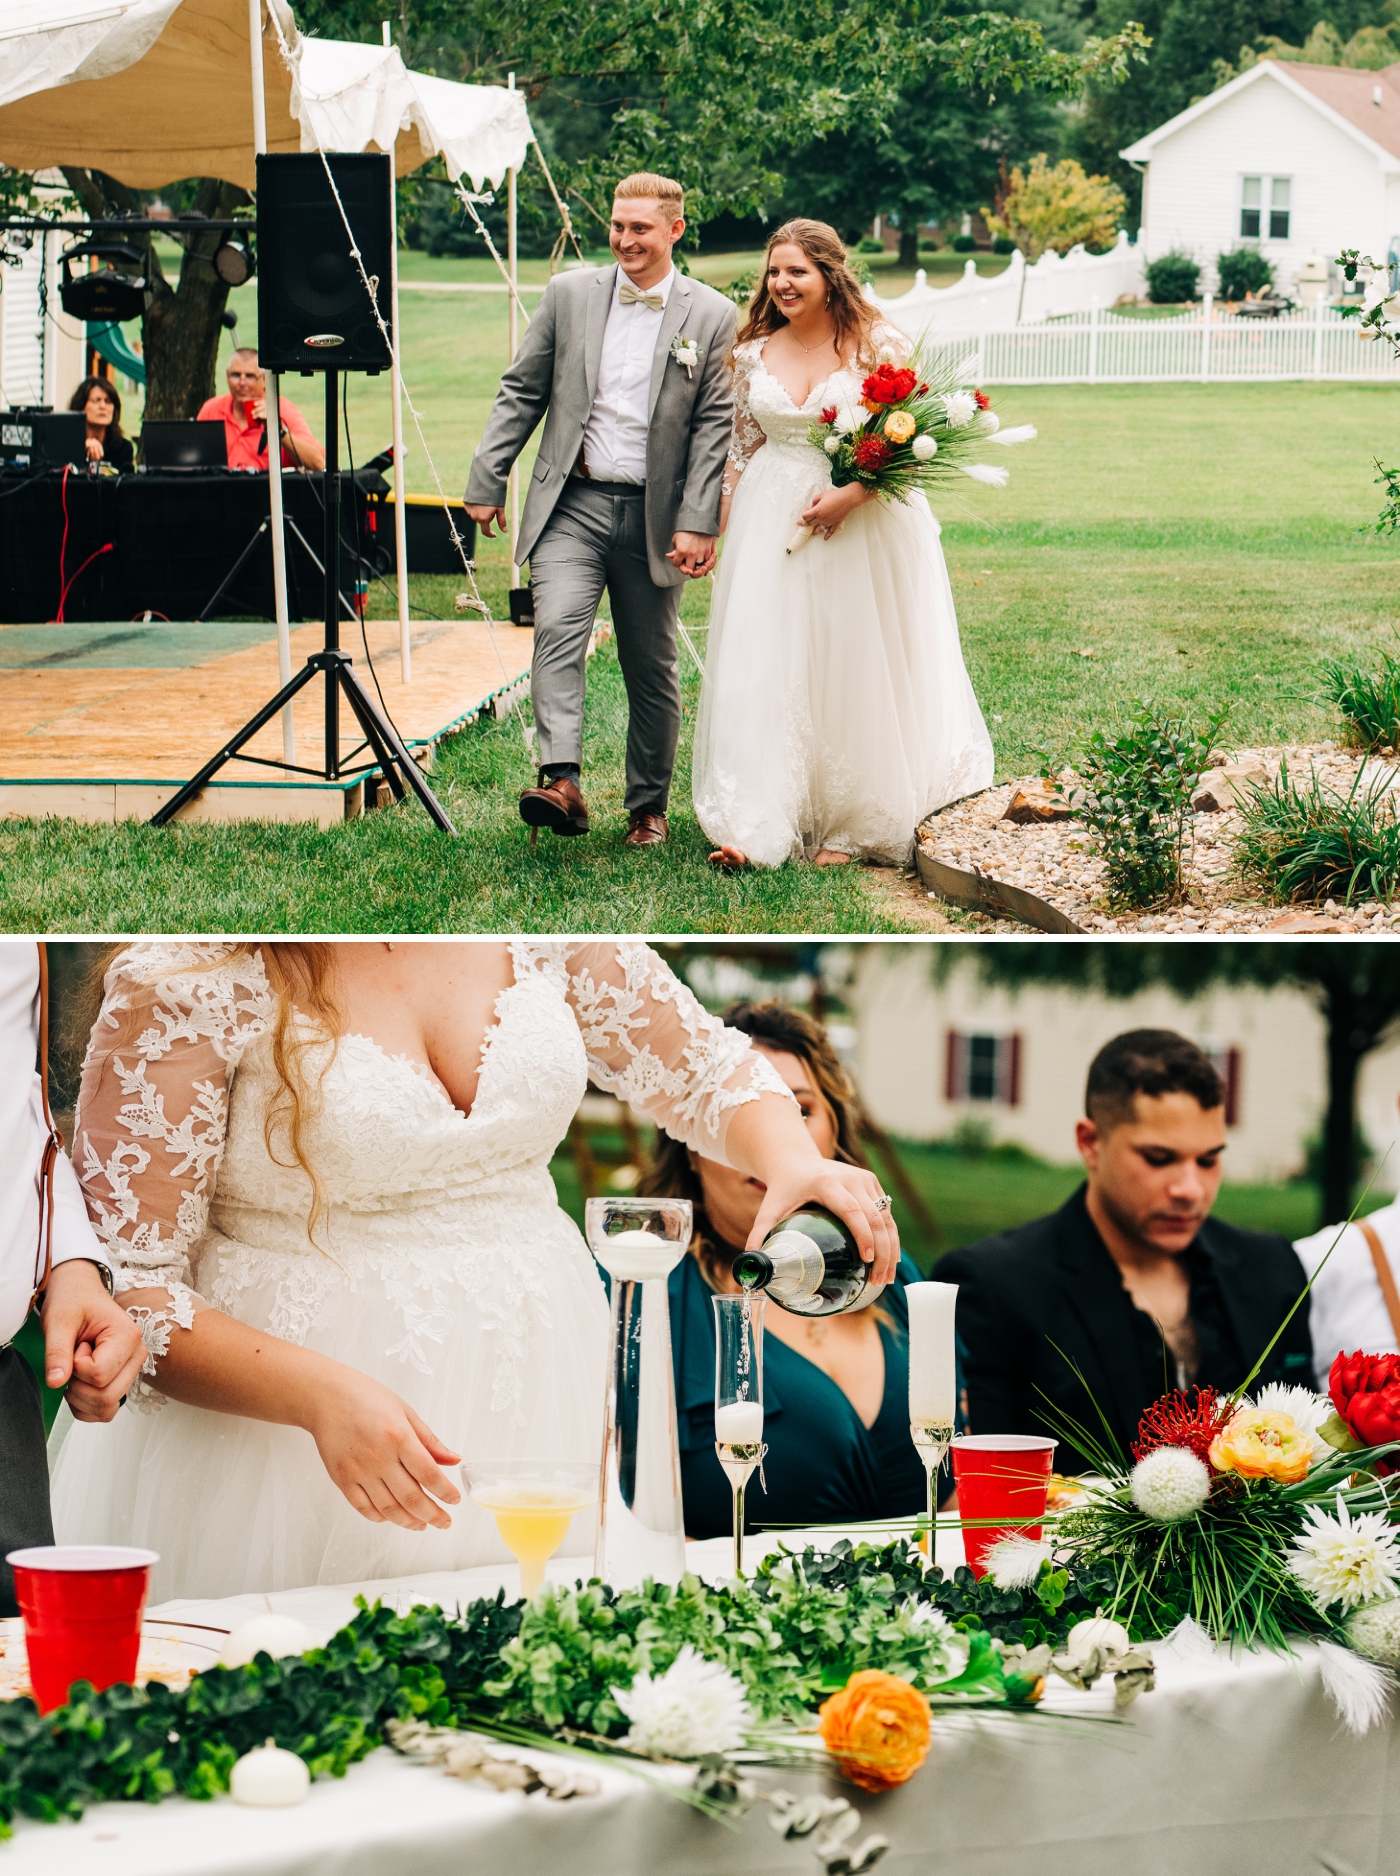 Backyard wedding reception in Washington, Indiana